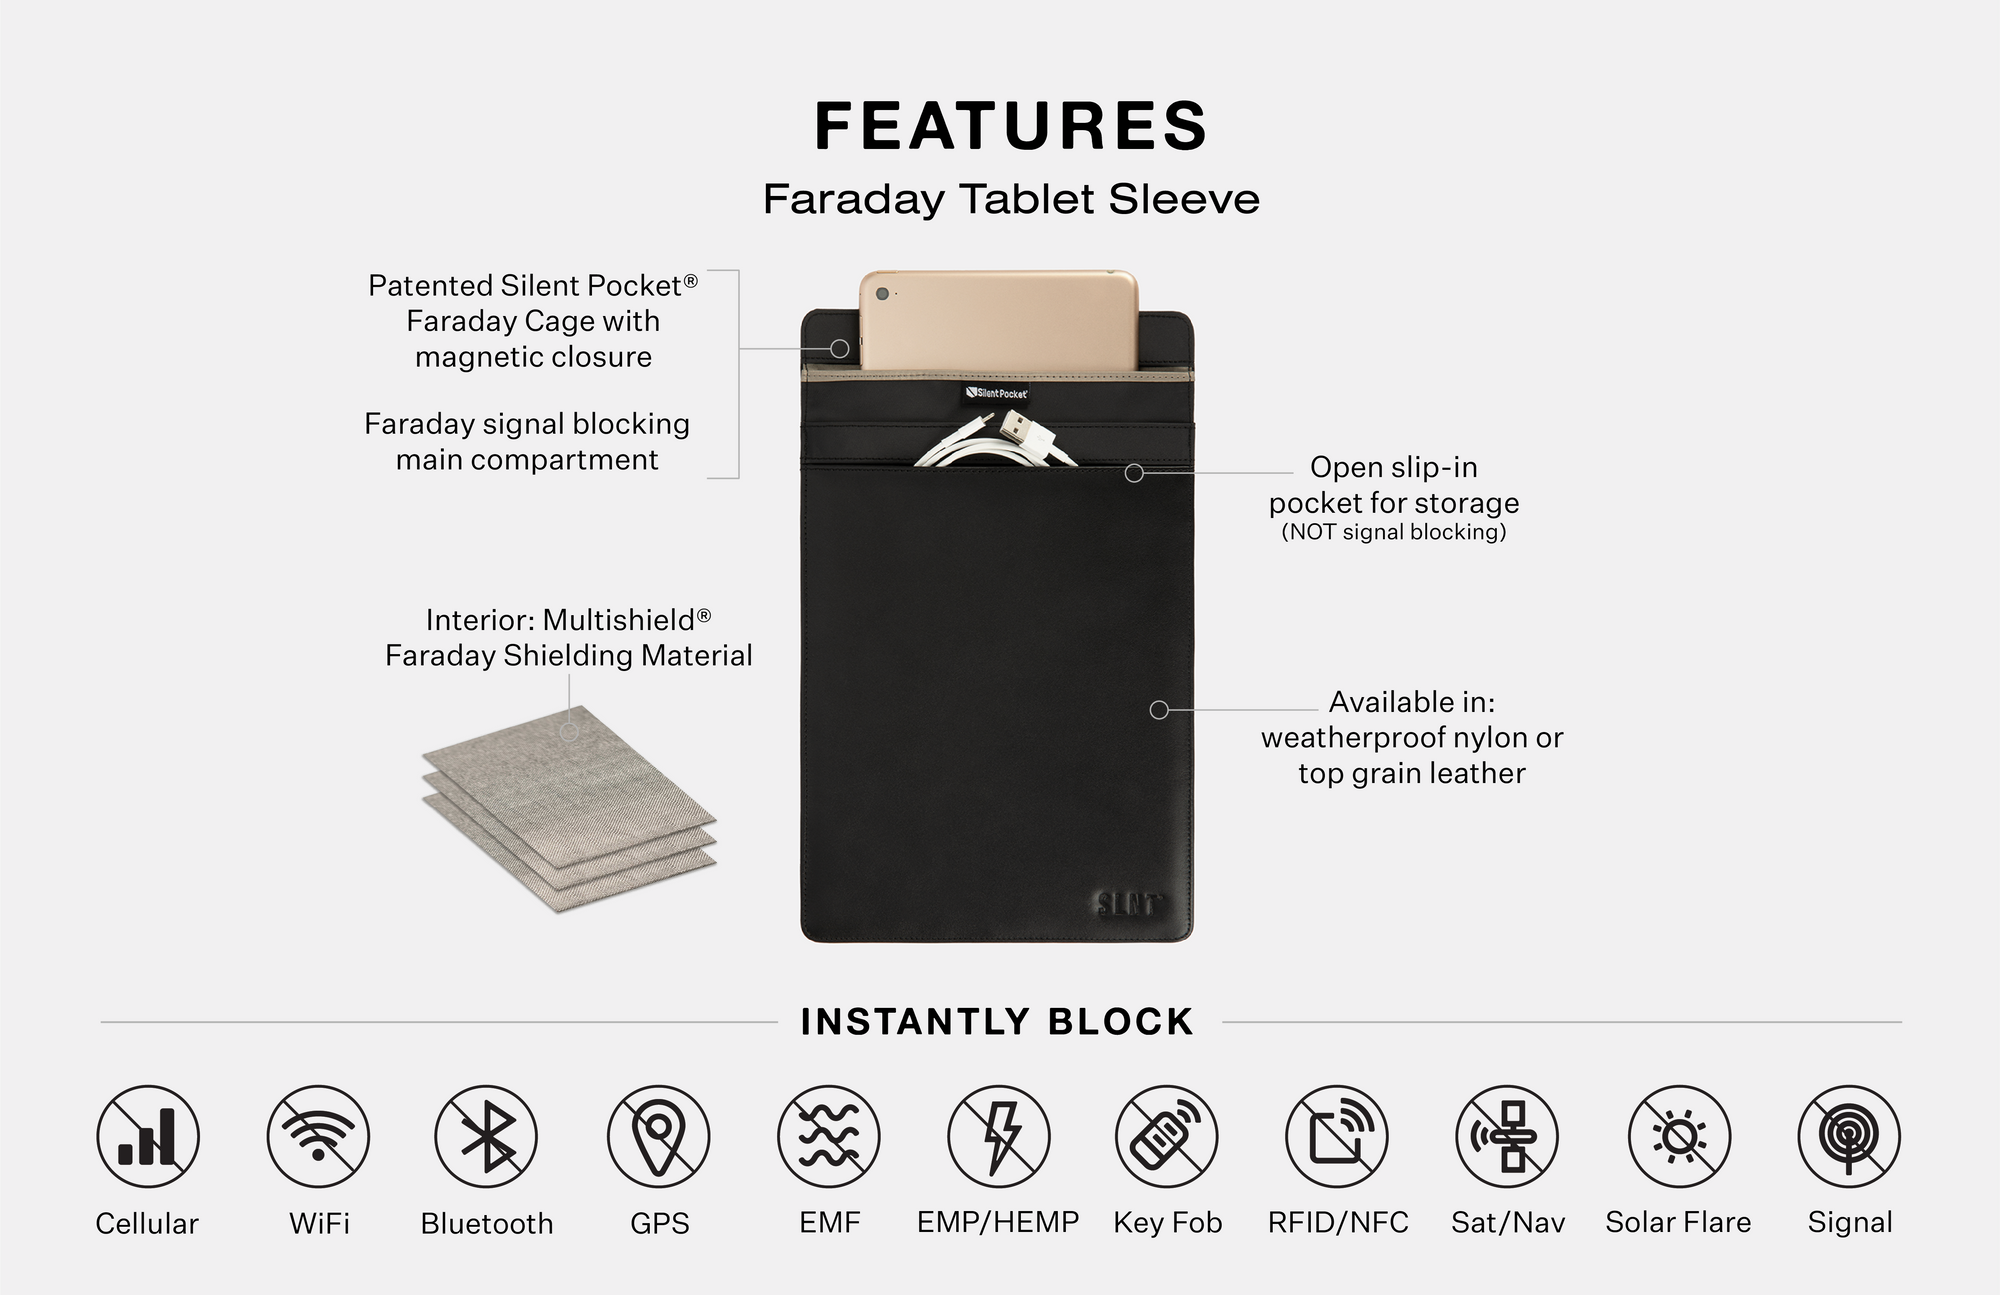 Faraday Tablet Sleeve